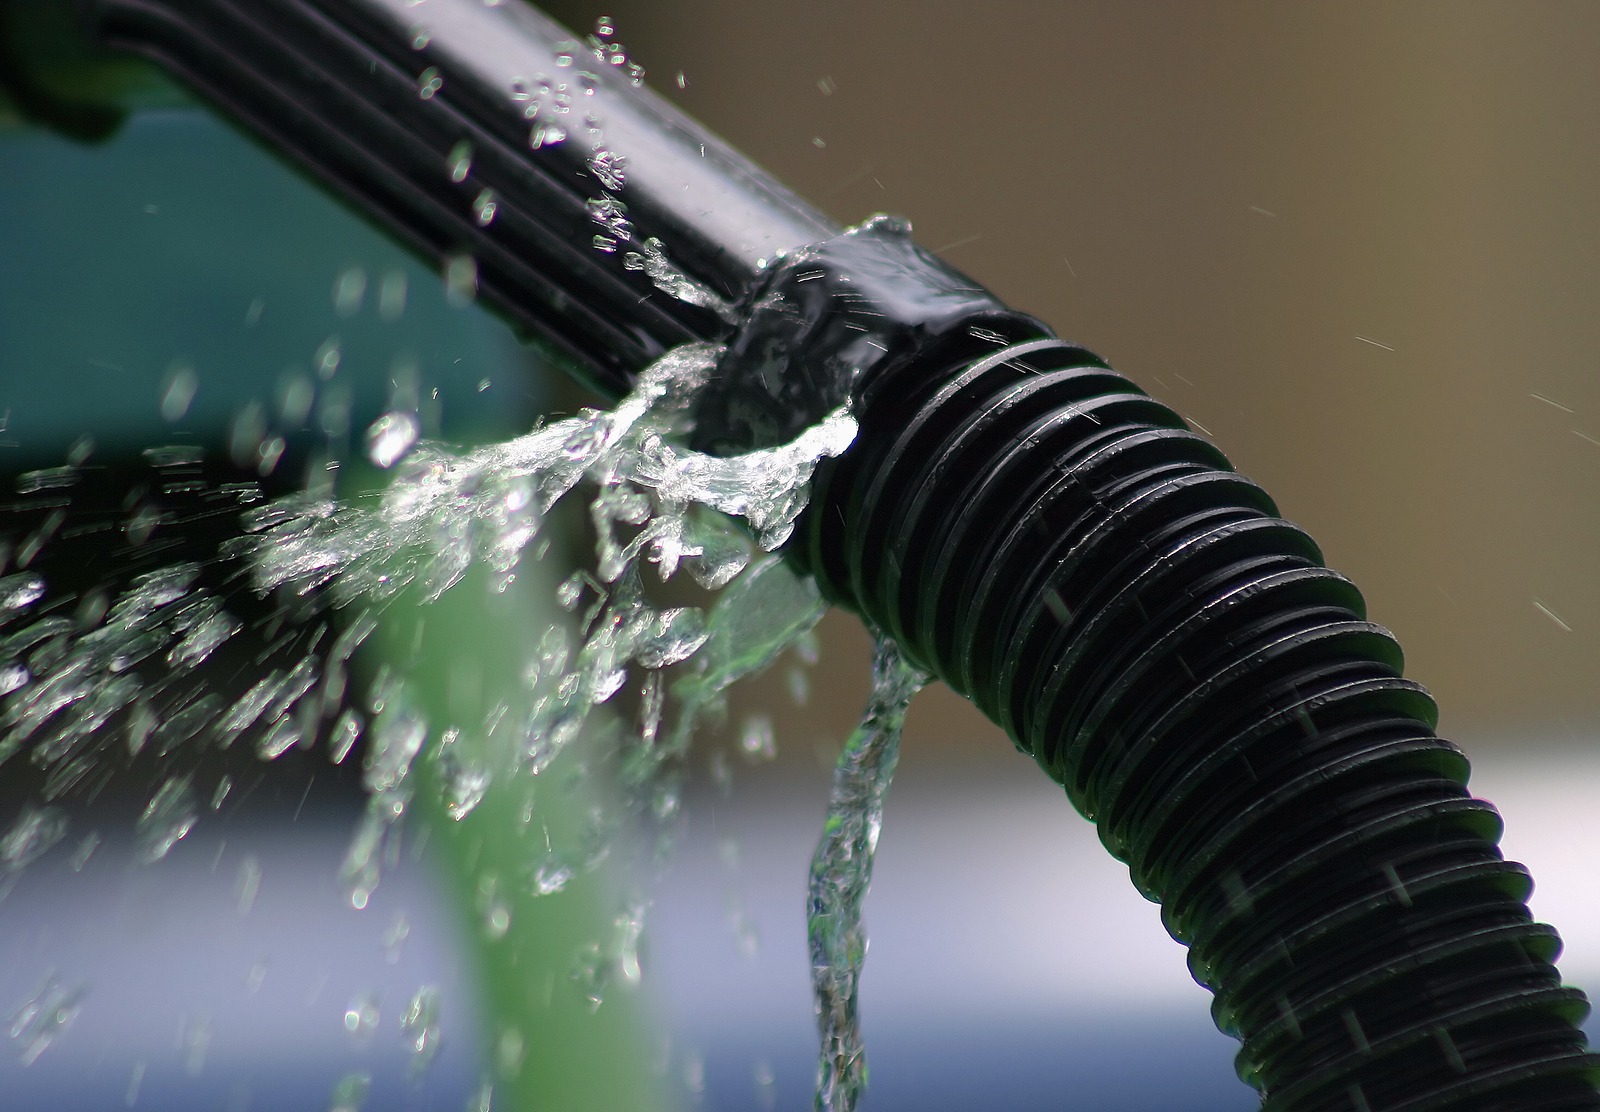 Replace Plumbing Danville, detecting water leaks